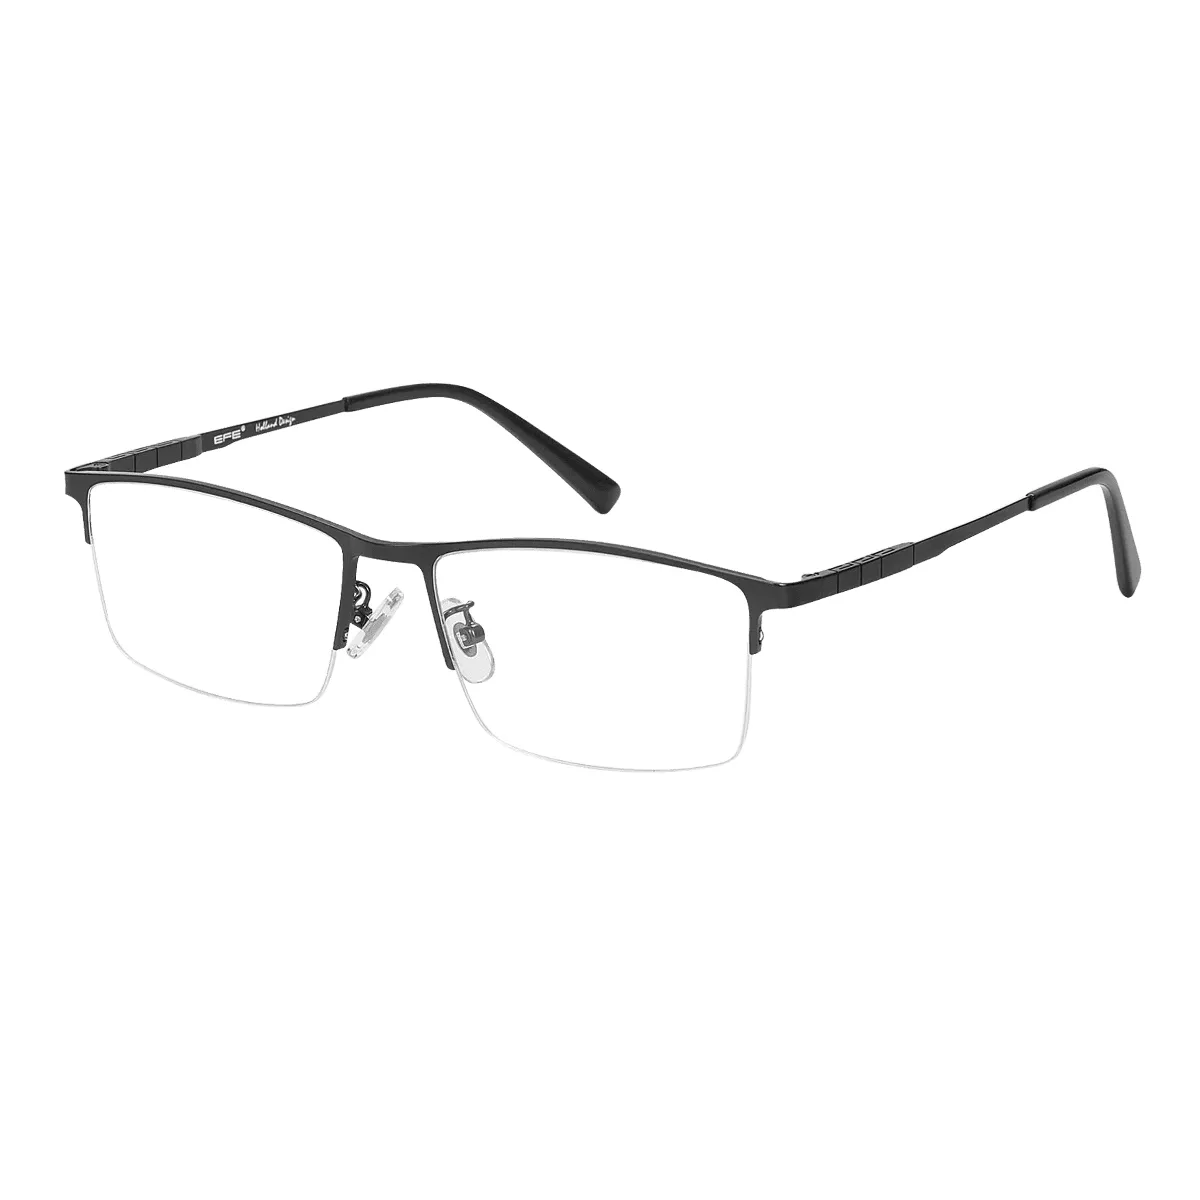 Clifford - Browline Black Glasses for Men